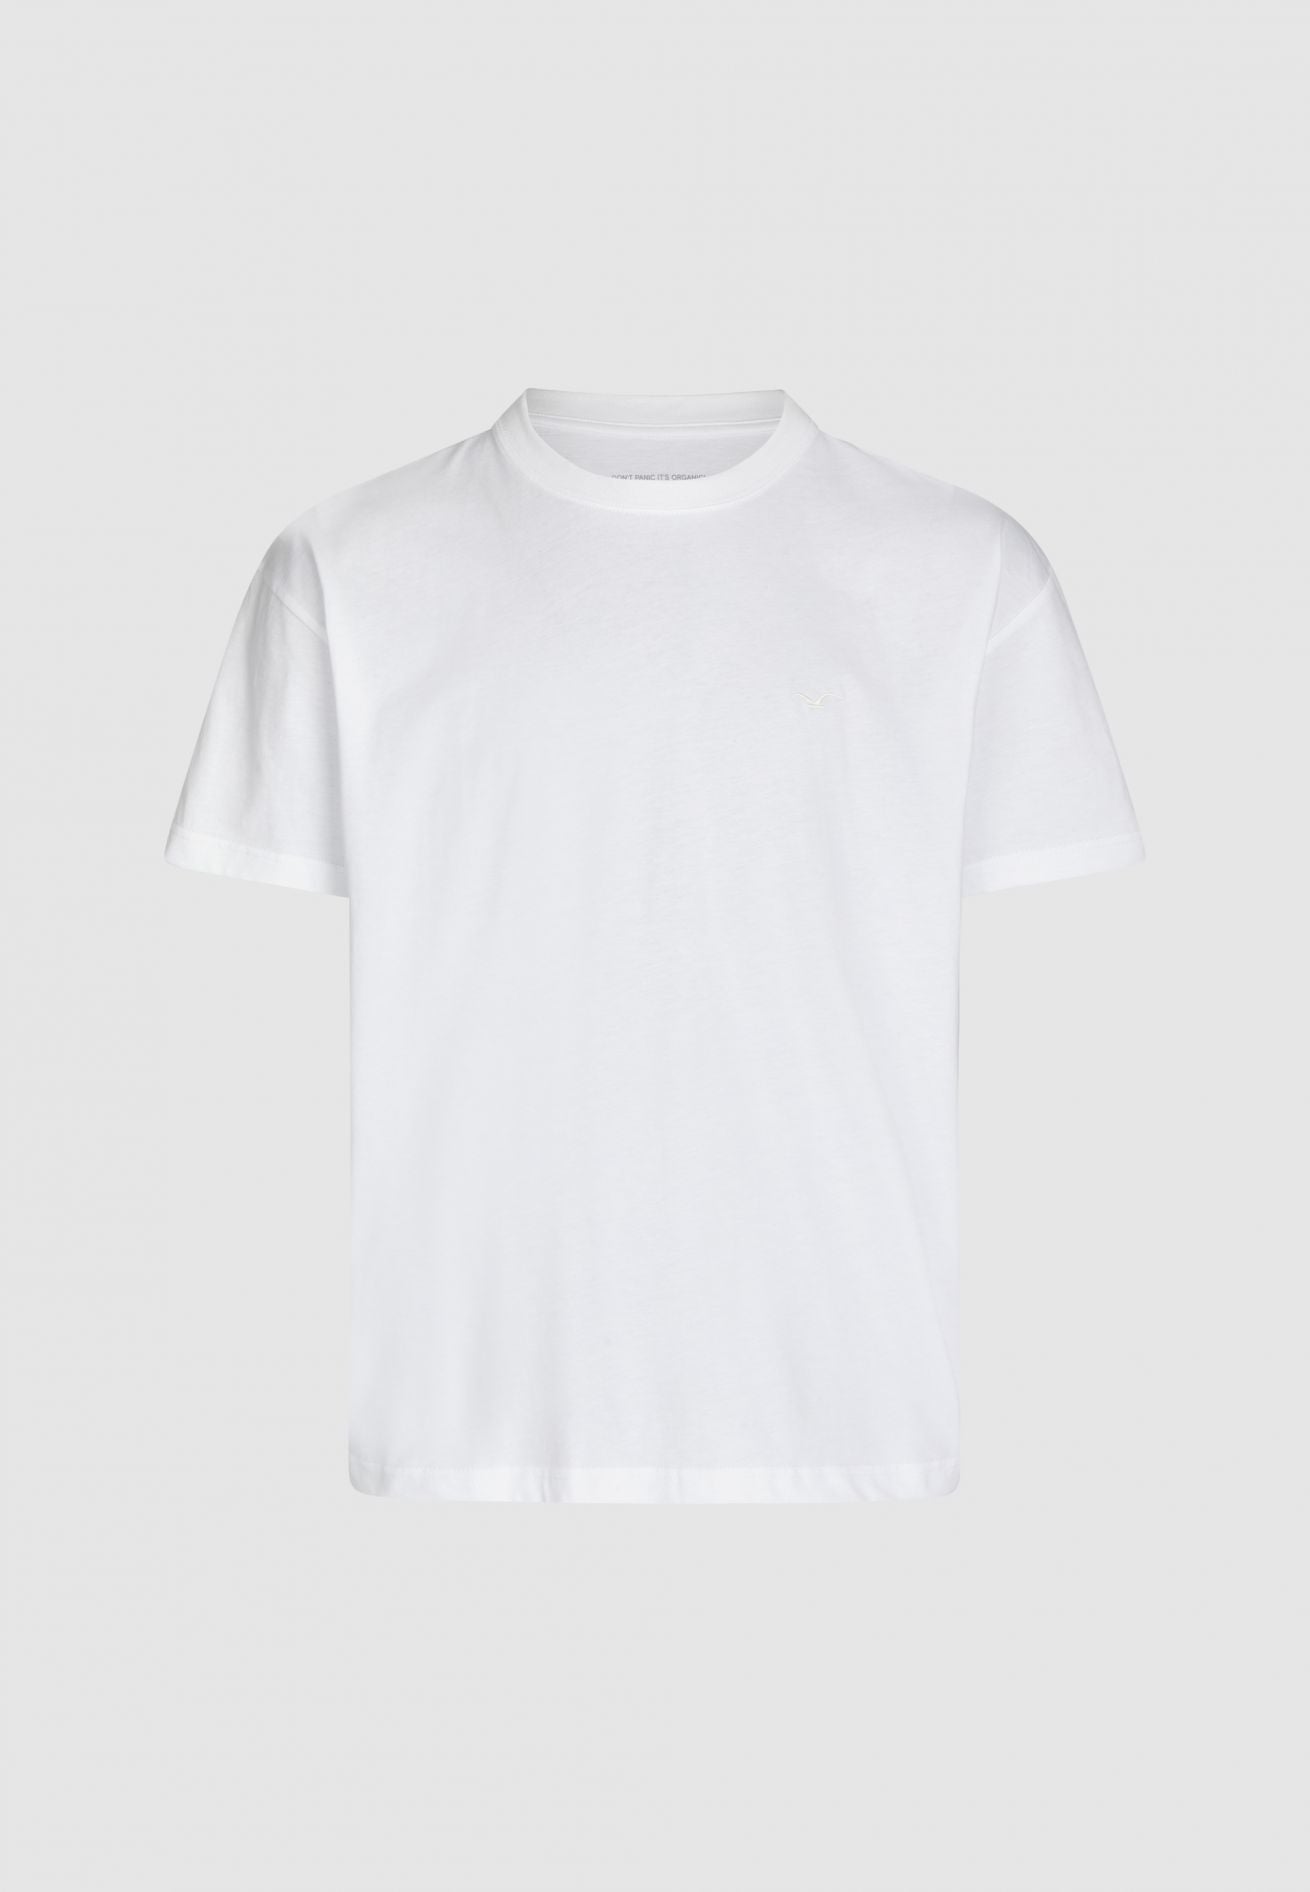 Cleptomanicx Ligull Oversize Special T-Shirt